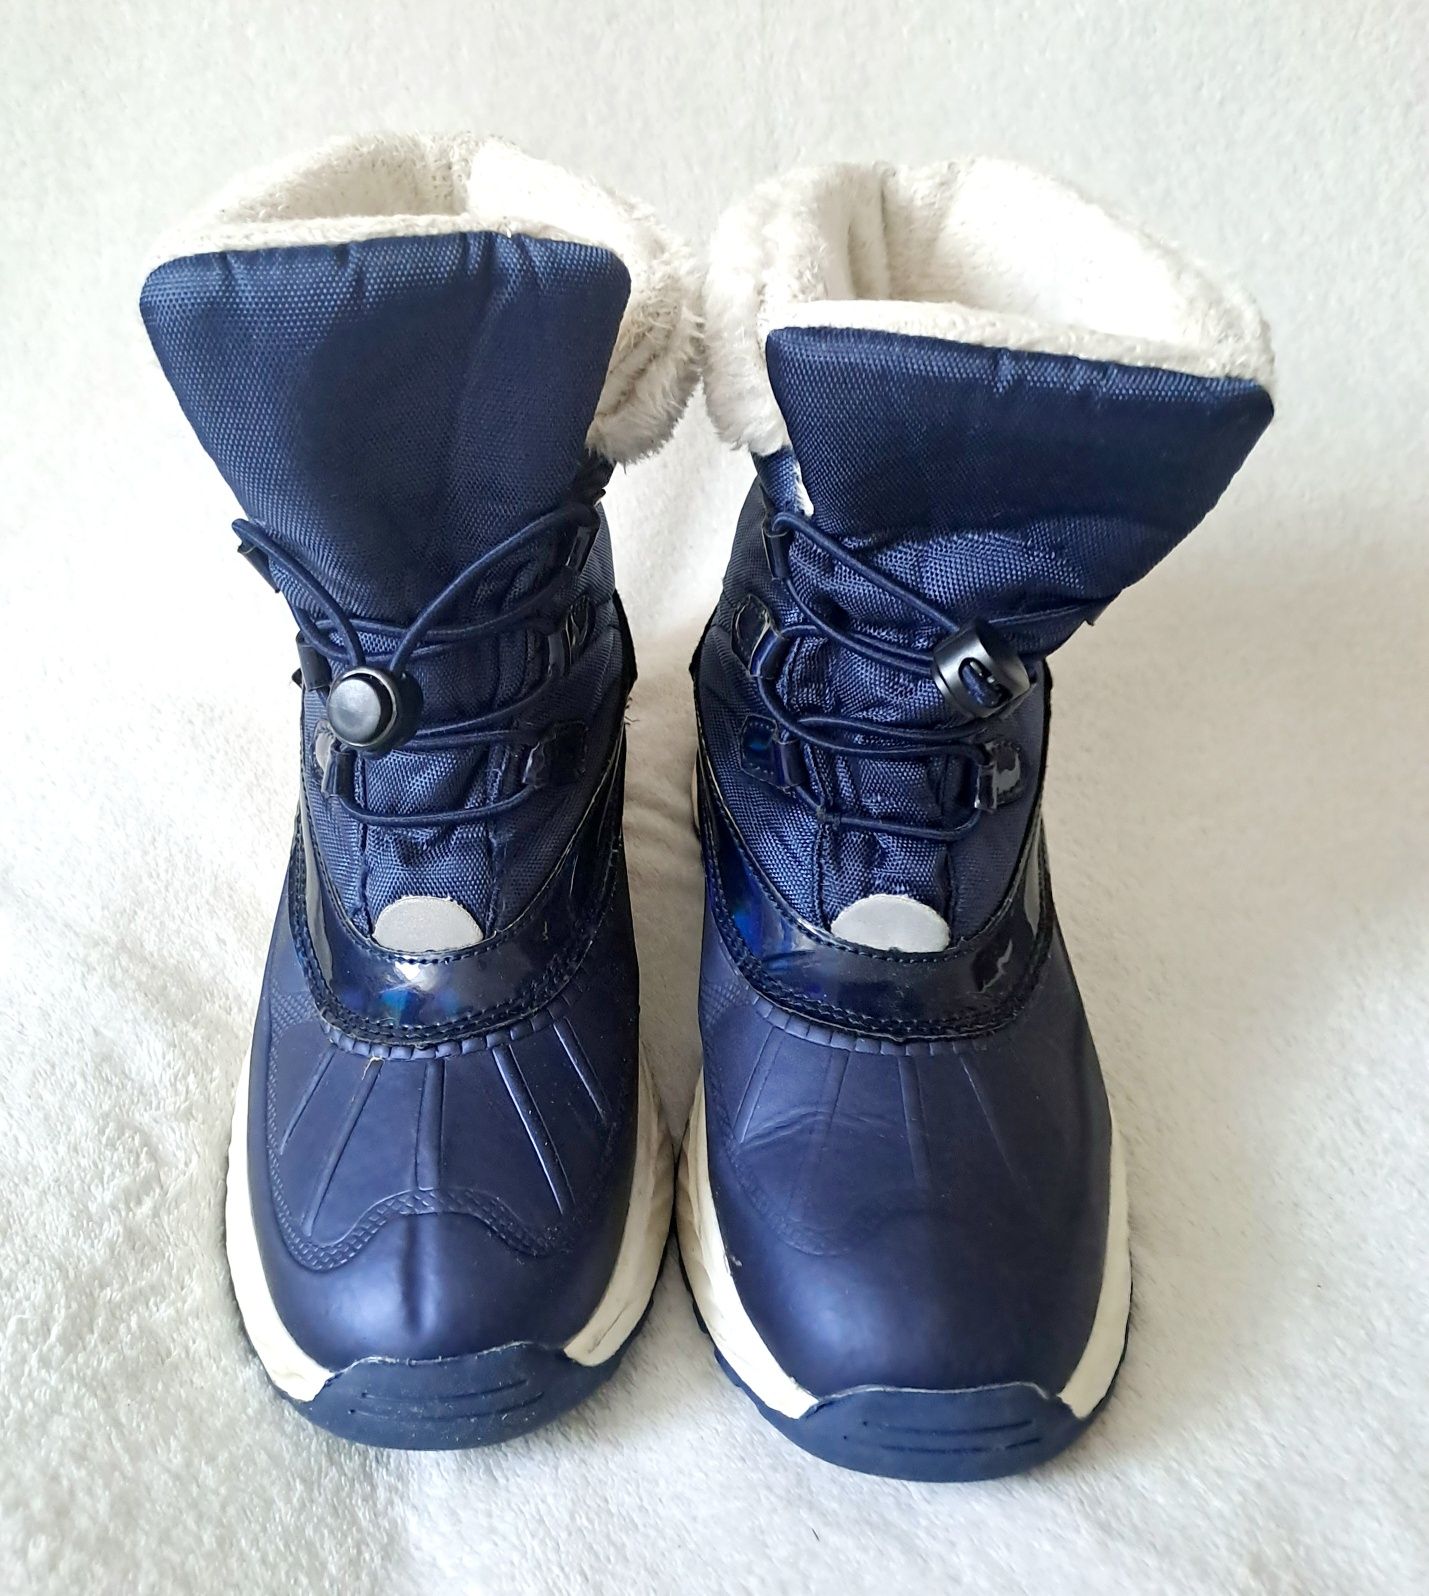 Śniegowce buty zimowe Pepperts 37